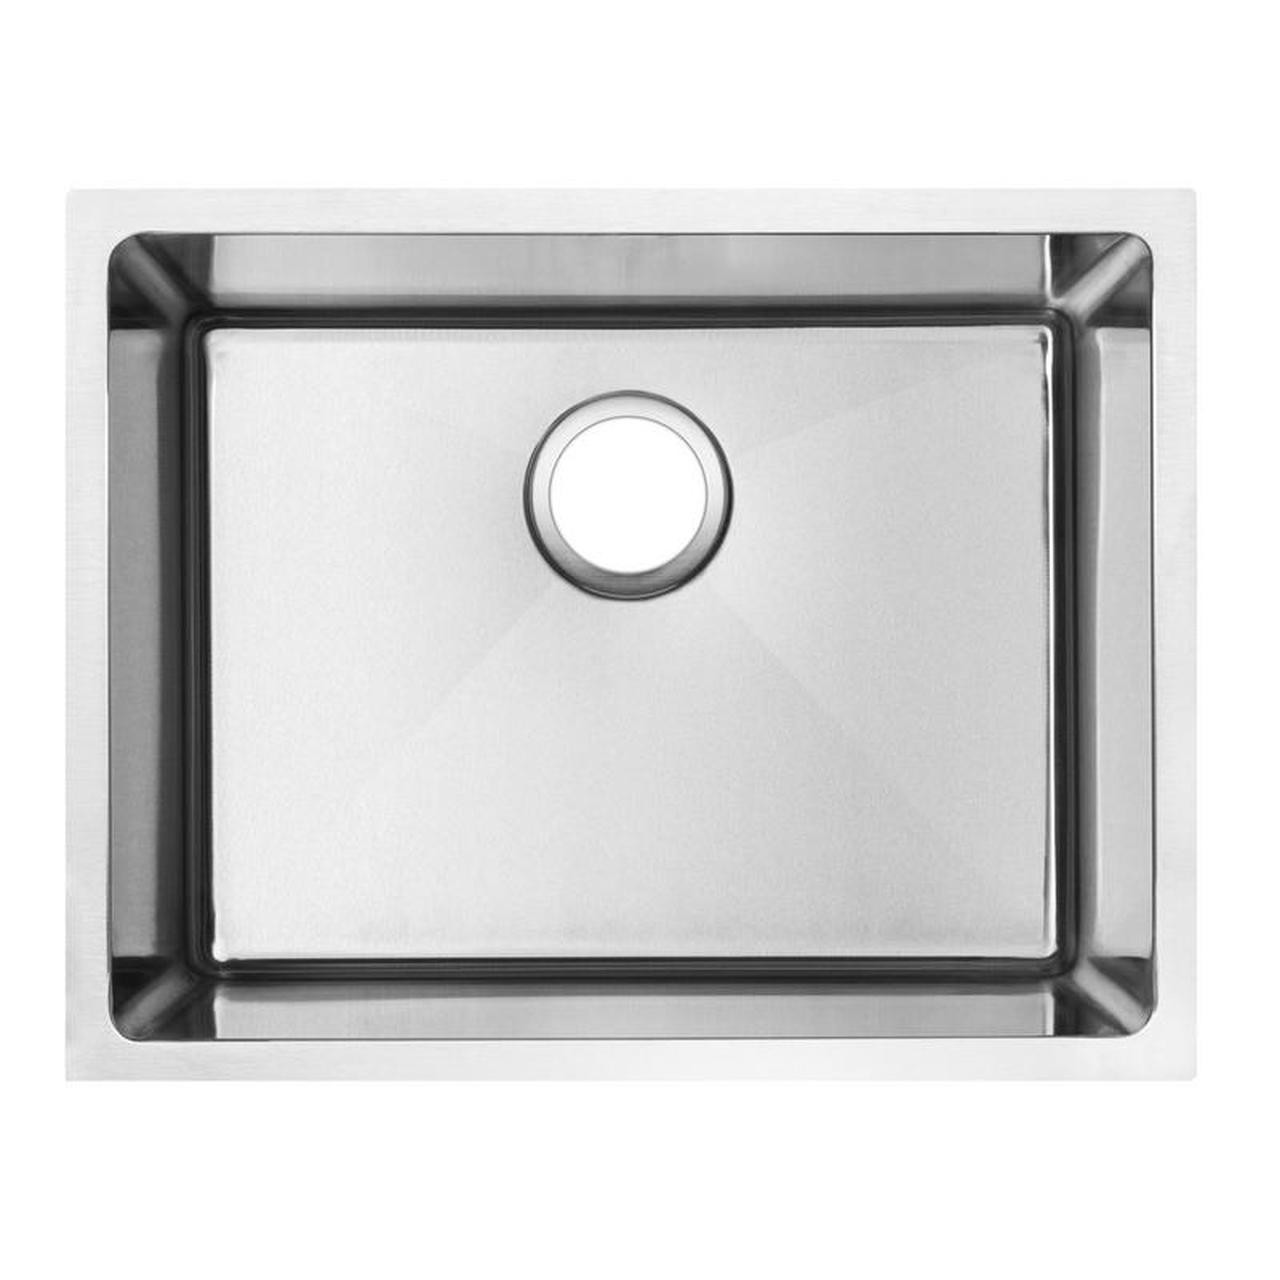 18-Gauge Stainless Steel Undermount Single Basin Modern Kitchen Sink